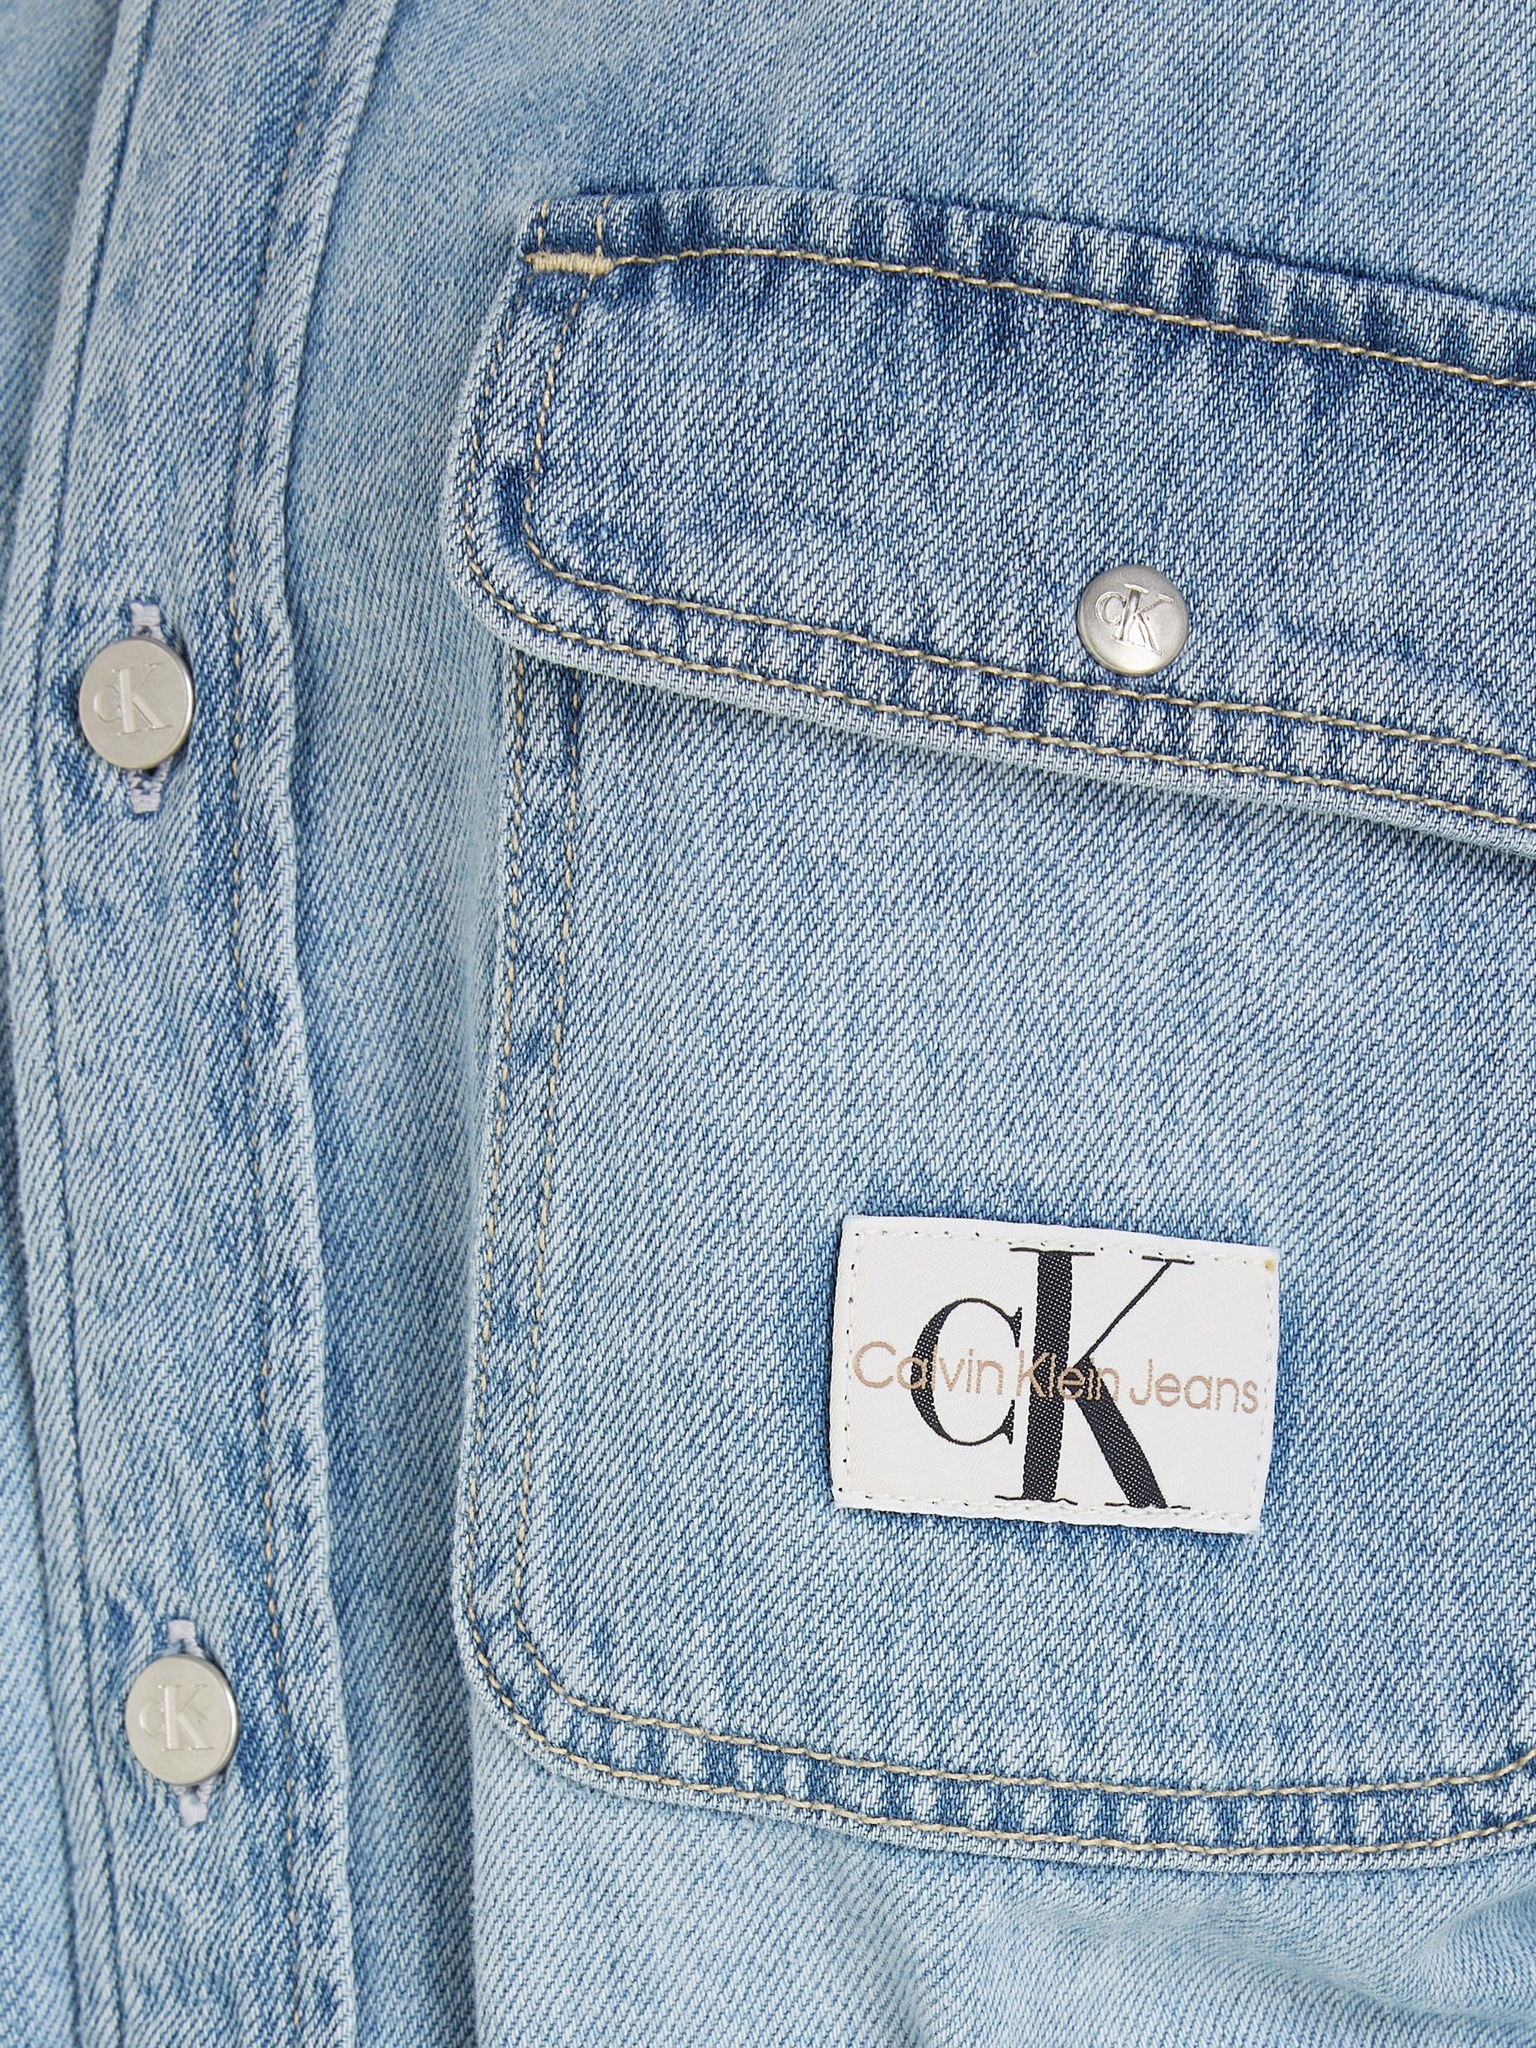 Calvin Klein Jeans - Dresses